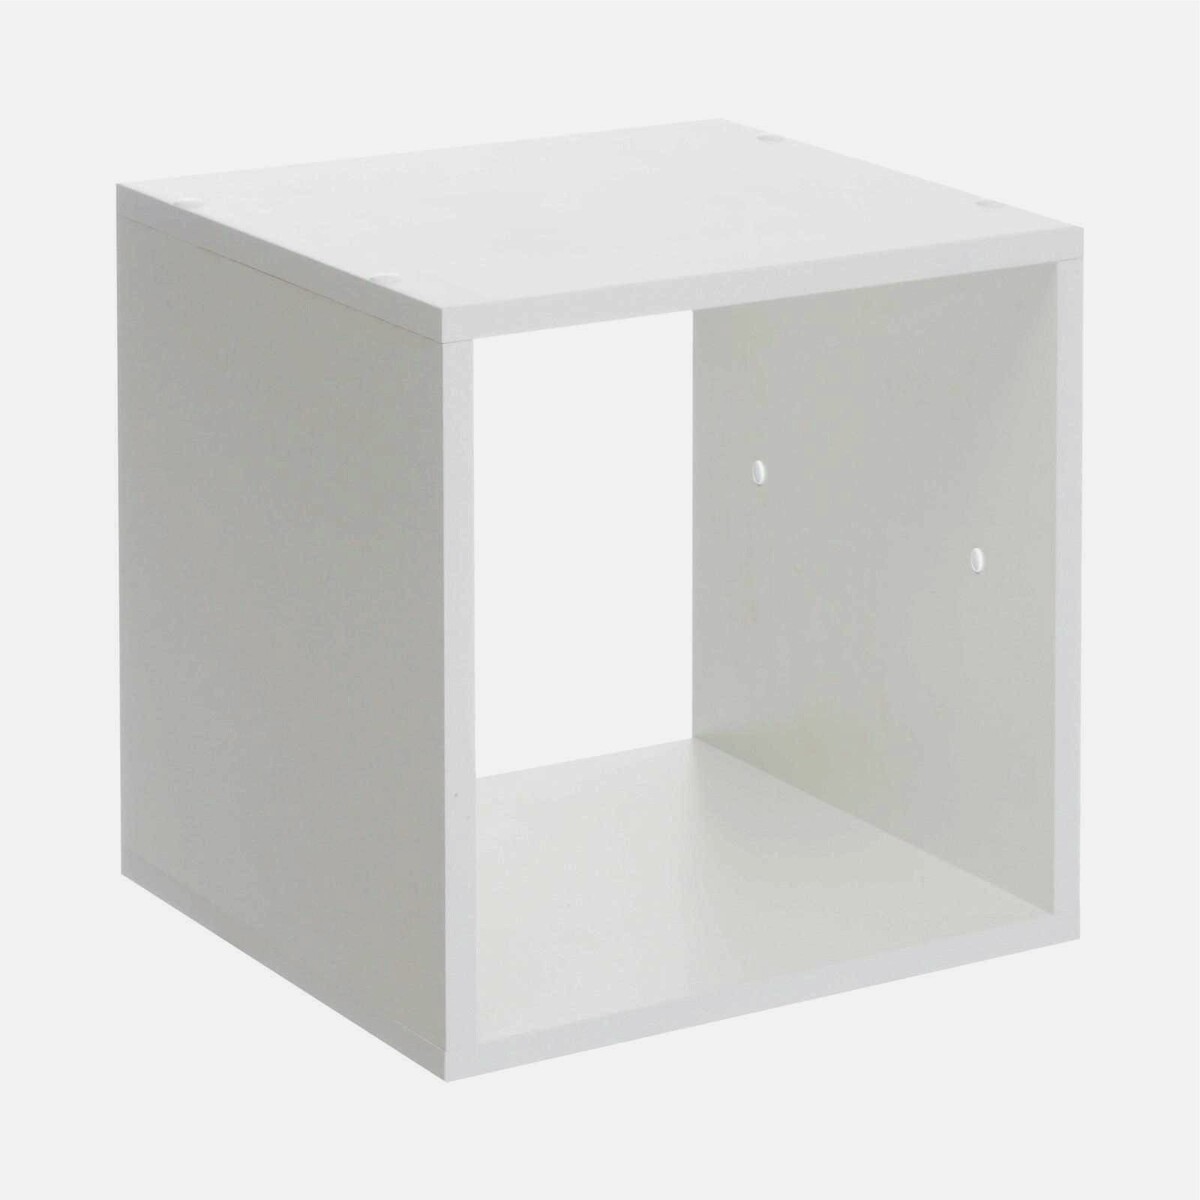 Стеллаж №1 dice cube 1 секция, 360х360х320, белый крючок навесной на дверь мебели 2 шт аллюр кдн 1 15 484 белый